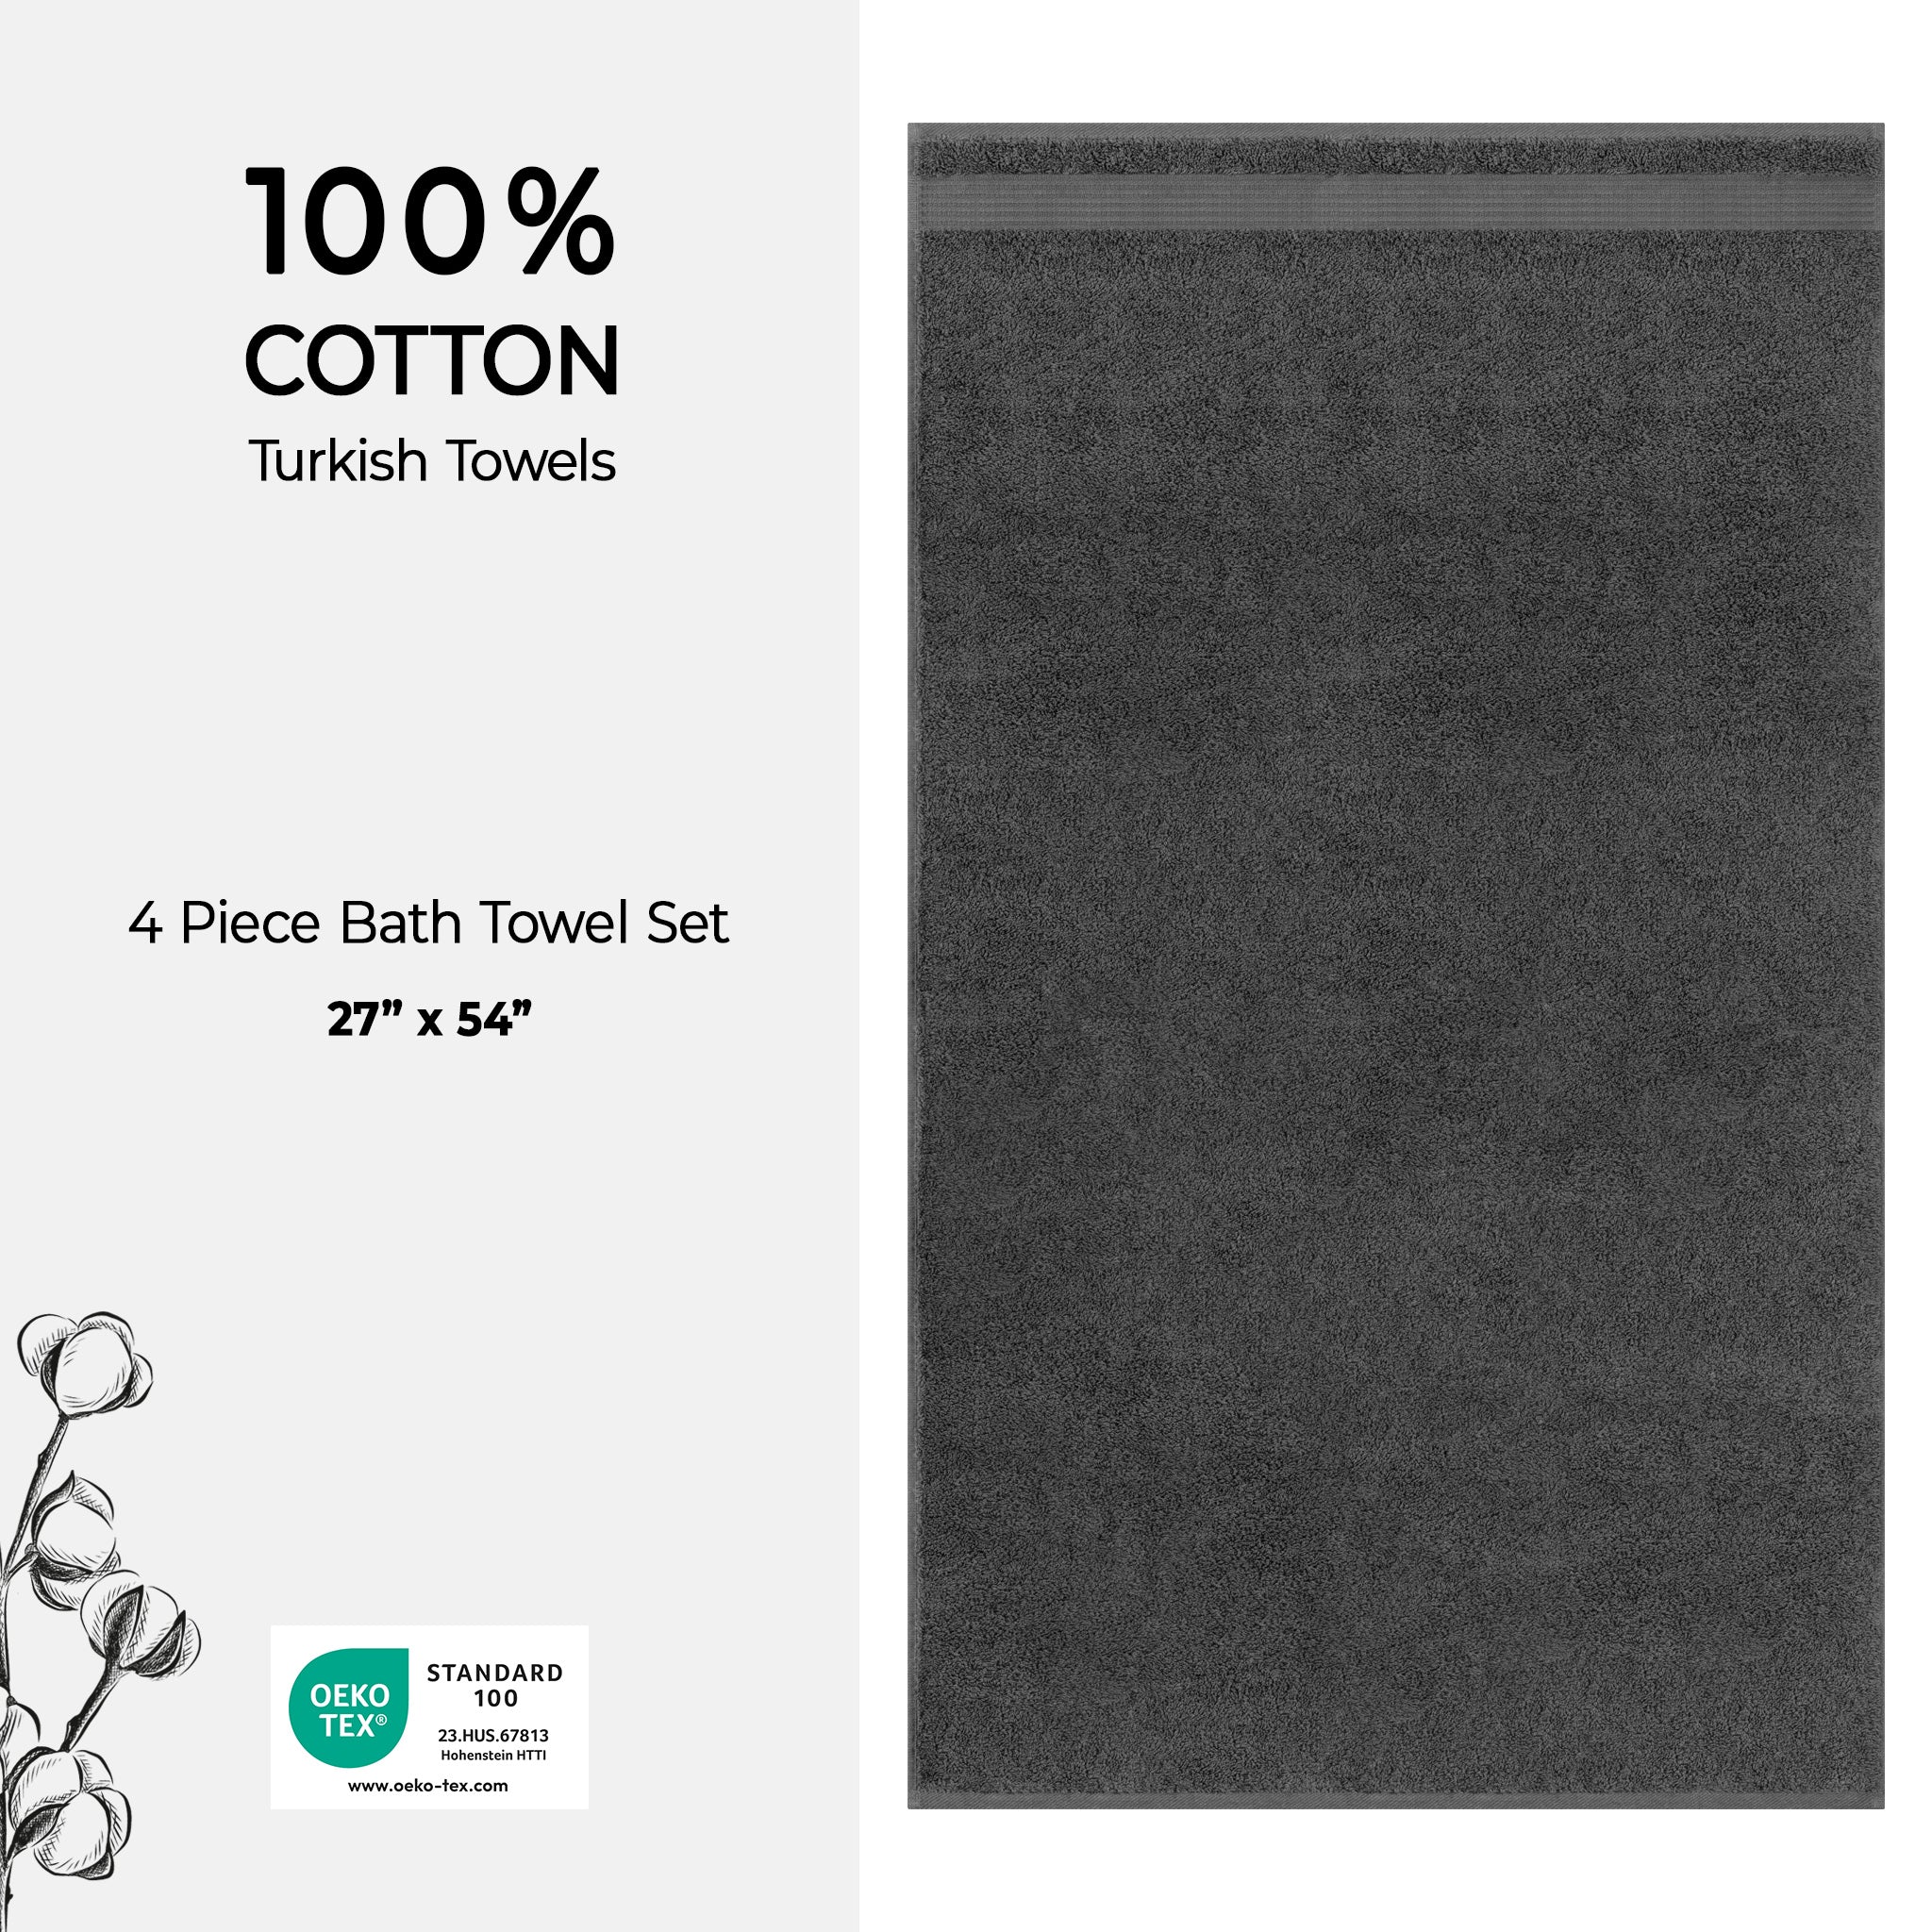 American Soft Linen Bekos 100% Cotton Turkish Towels, 4 Piece Bath Towel Set -gray-04